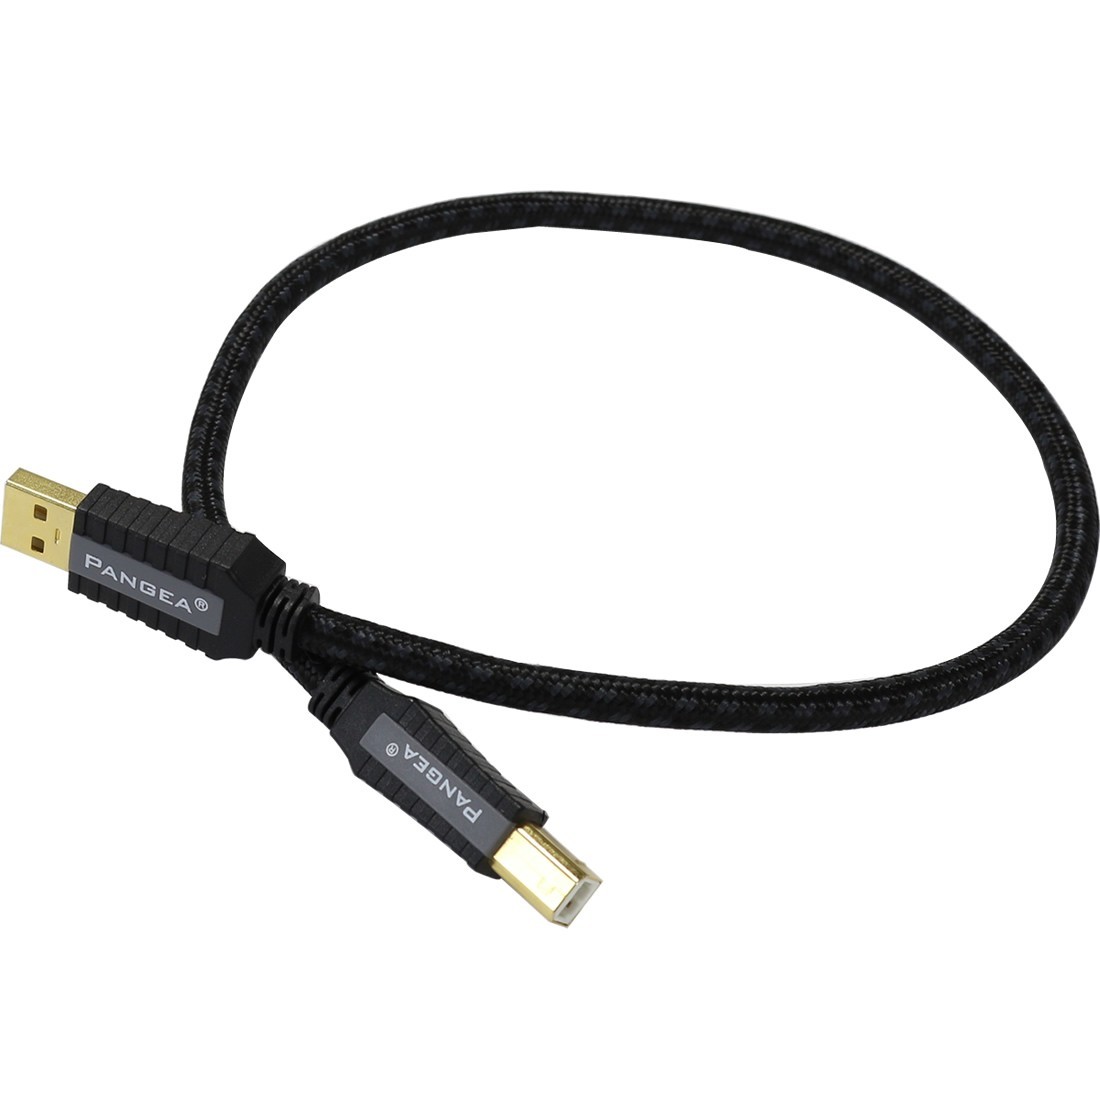 PANGEA Premier SE Cable USB-A Male/USB-B Male 2.0 Gold plated Cardas Copper 0.5m